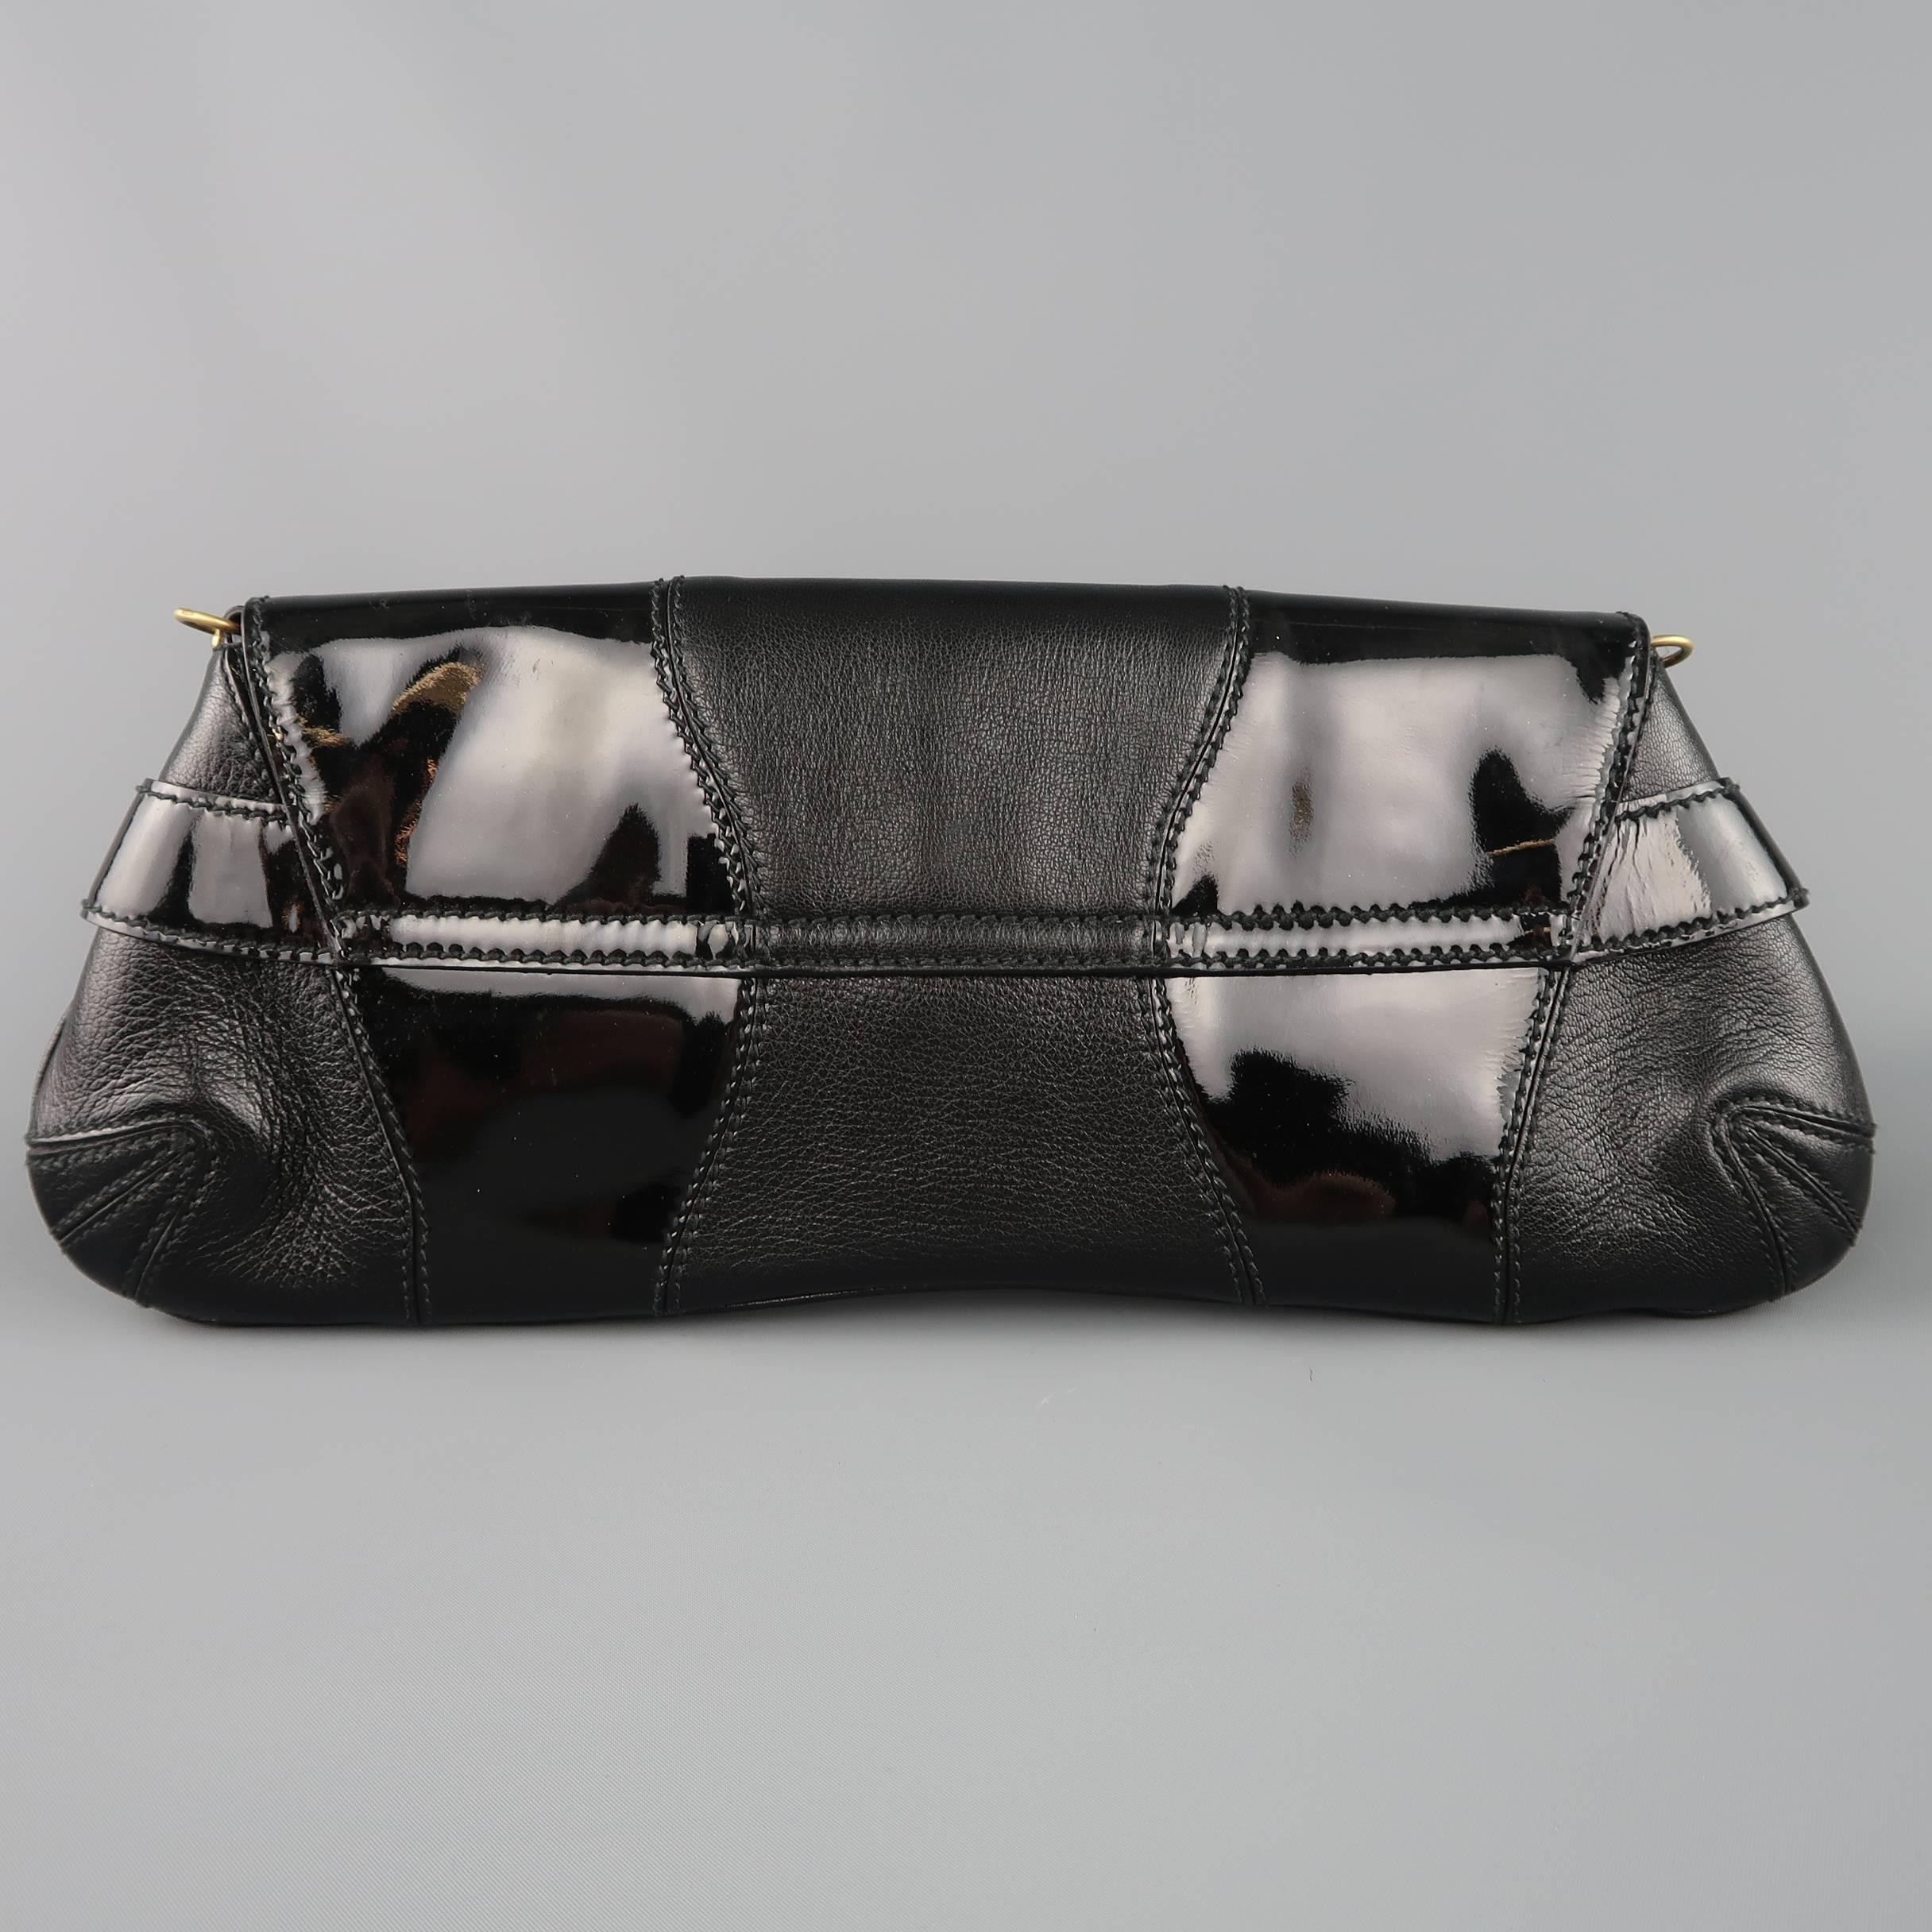 GUCCI Black Patent Leather Panel Gold Horsebit Clutch Handbag 4